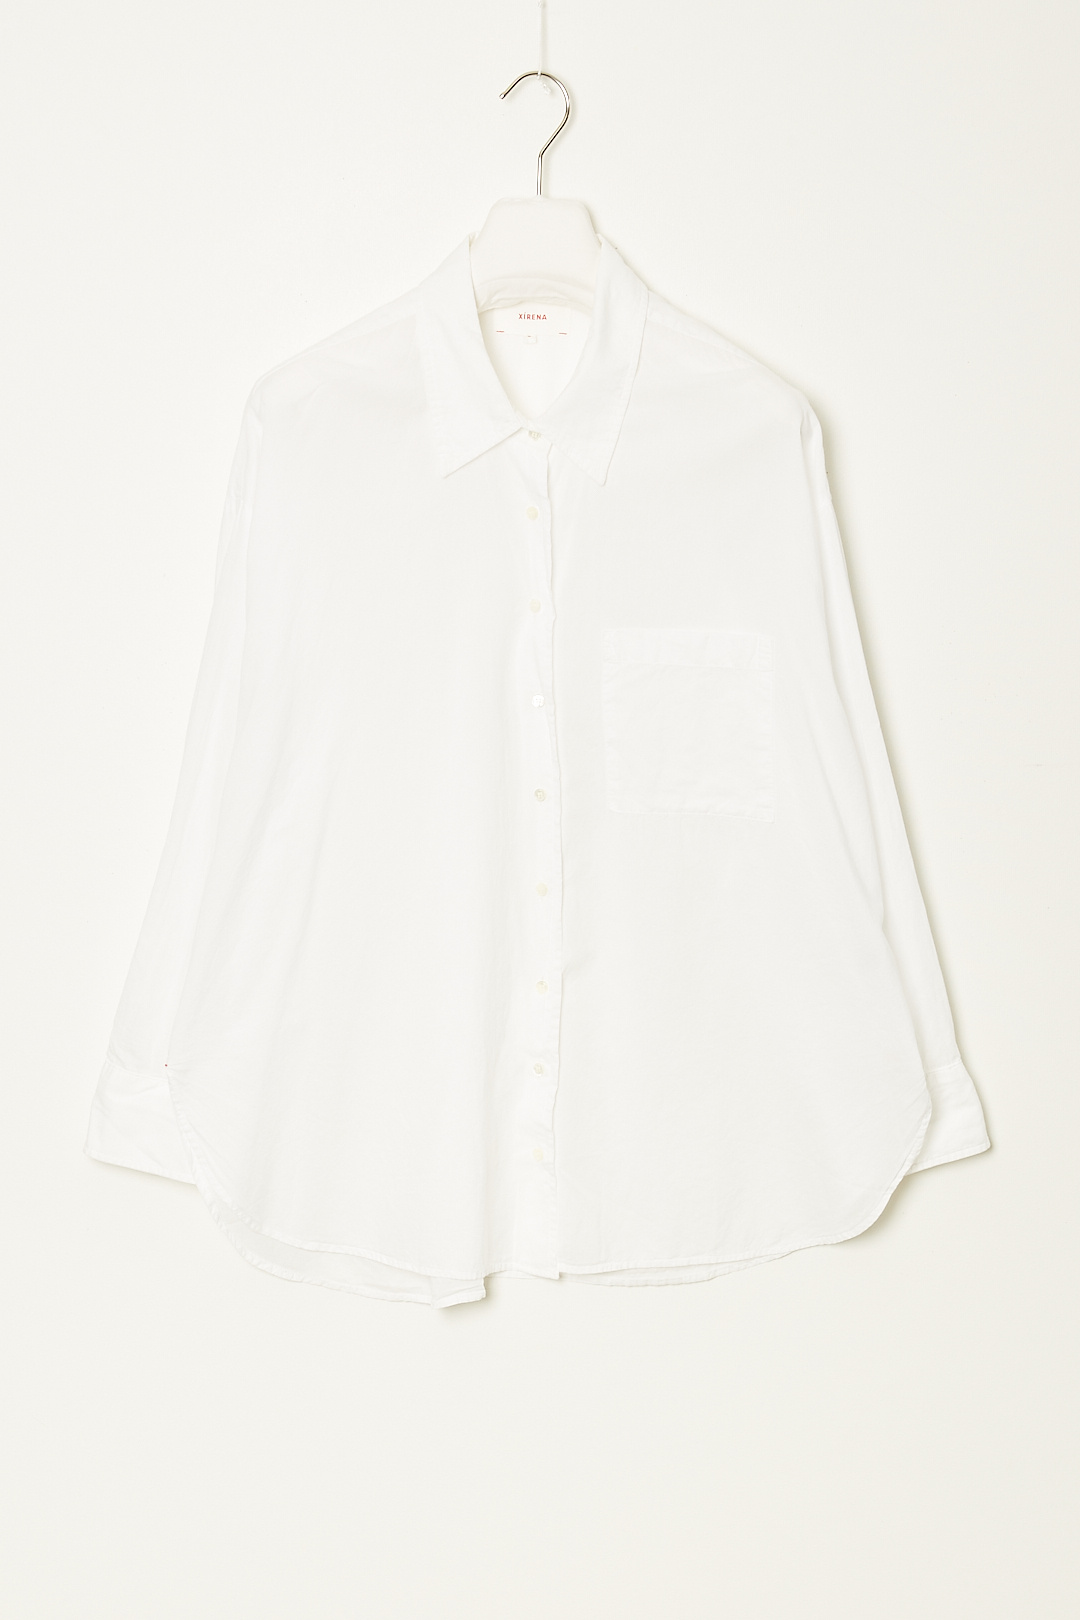 Xirena - Sydney cotton poplin shirt